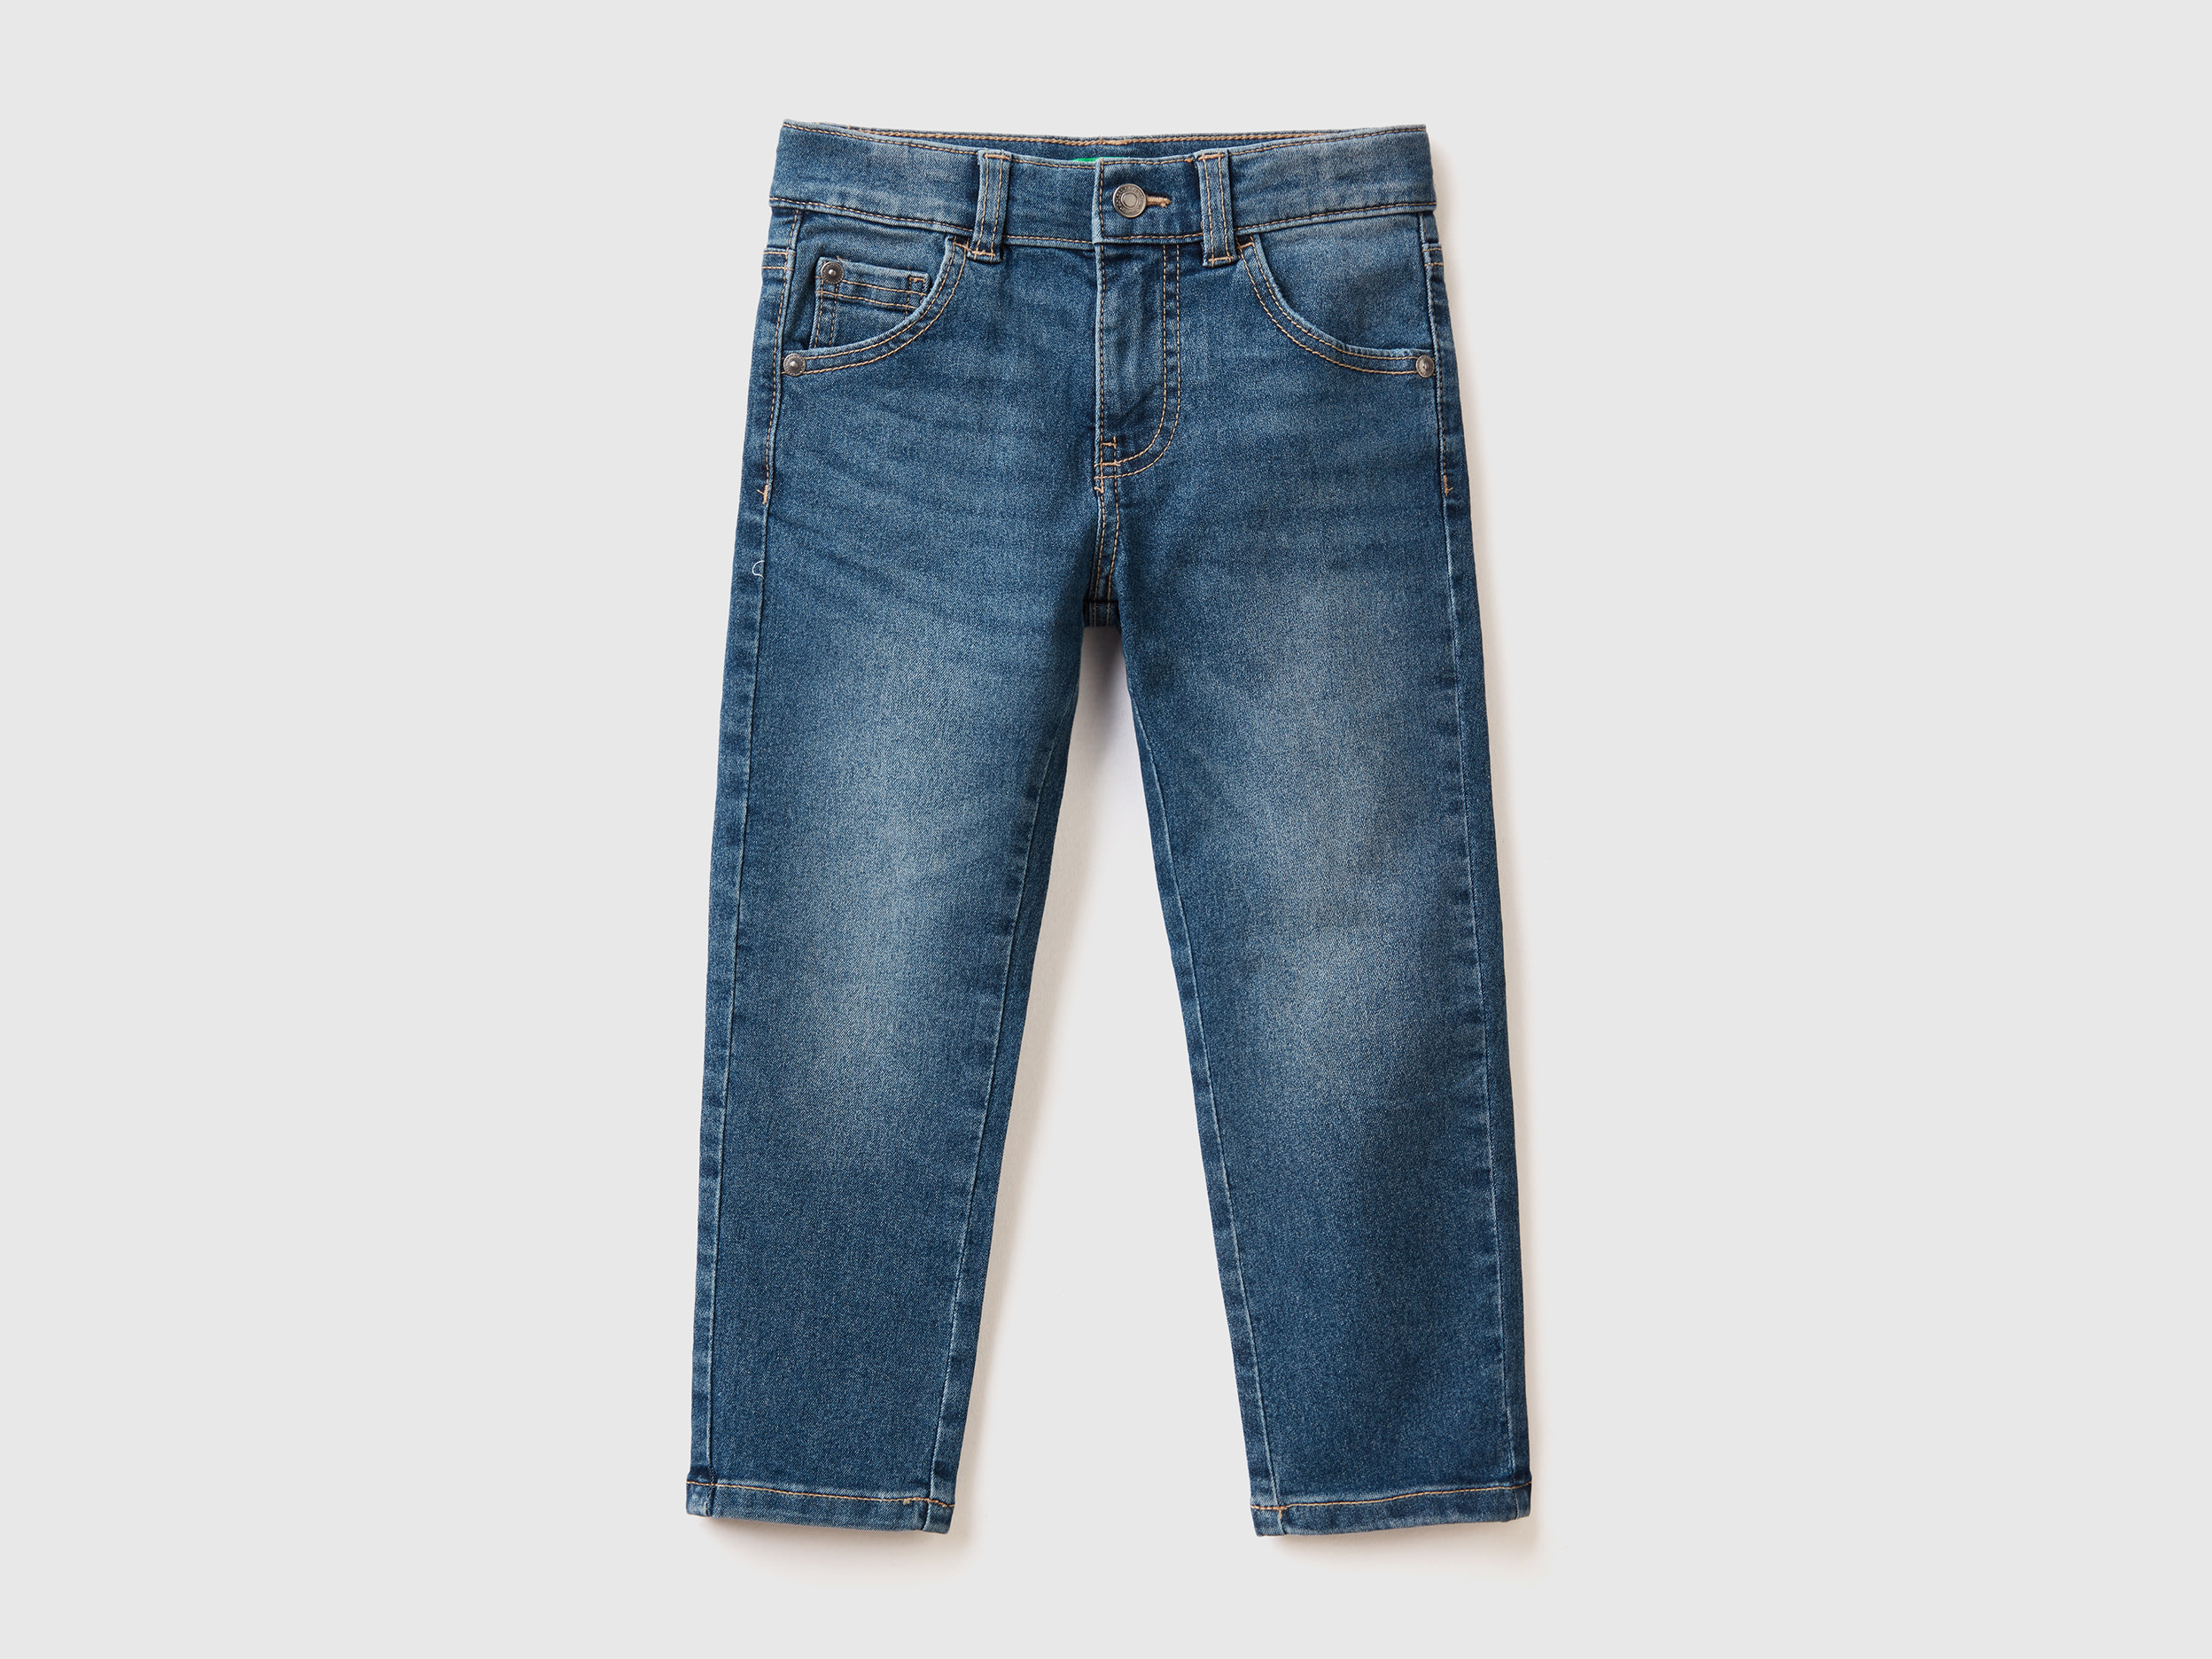 Benetton, Vintage Look Skinny Fit Jeans, size 3-4, Dark Blue, Kids